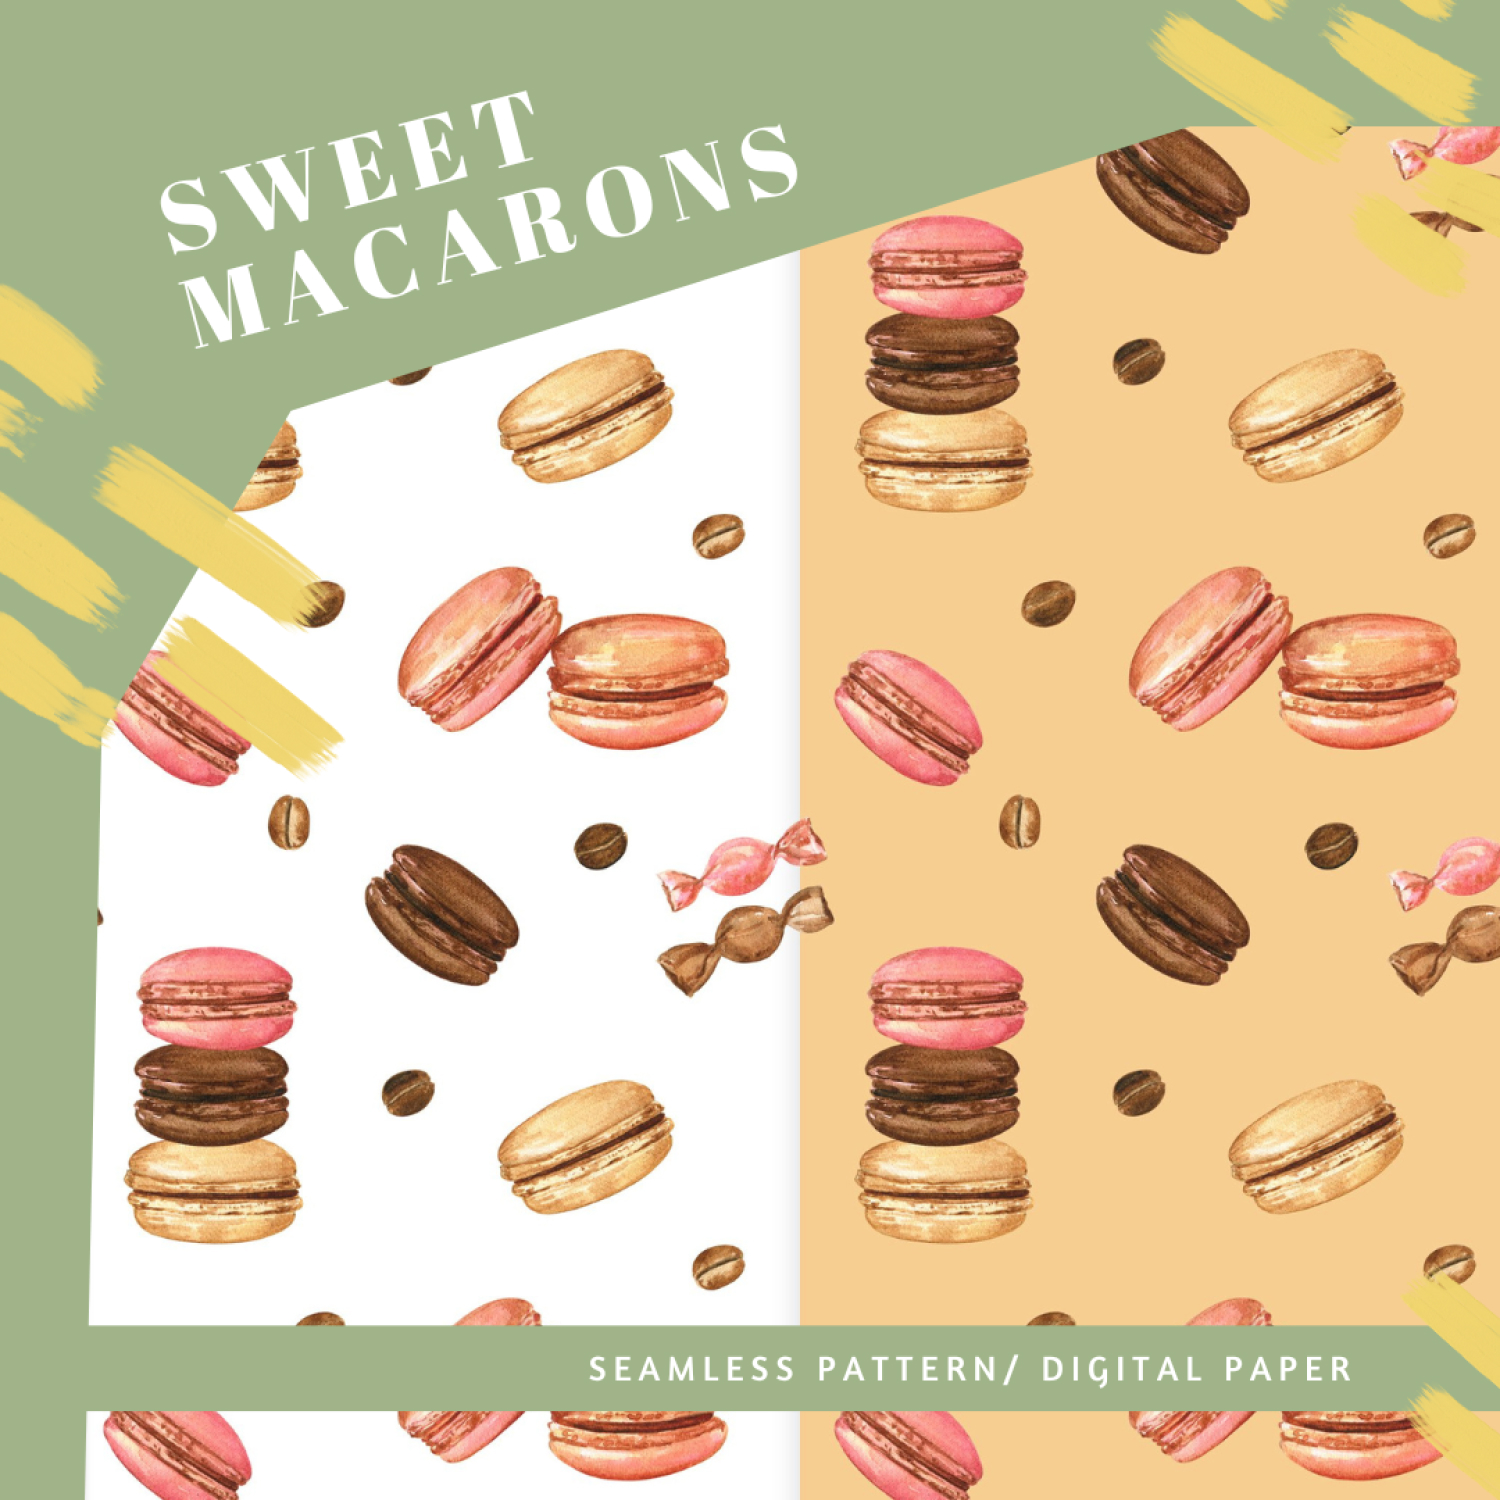 Sweet Macarons Seamless pattern/ digital paper, jpg, png.